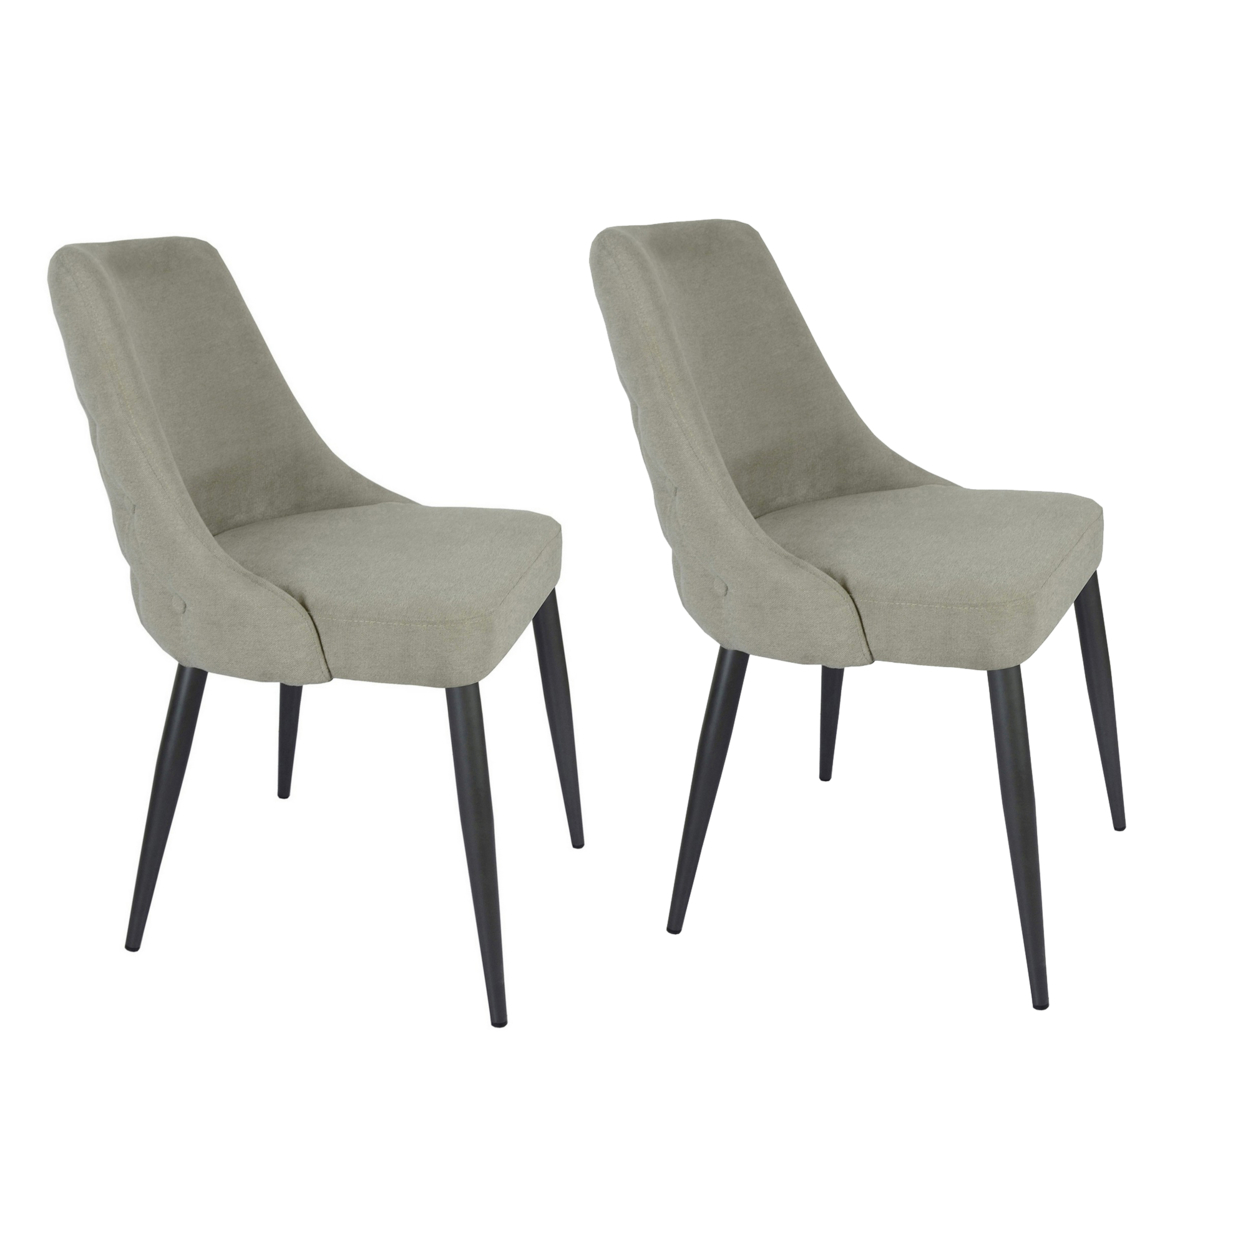 Glom 21 Inch Dining Chair, Set Of 2, Off White Upholstery, Tufted Backrest- Saltoro Sherpi